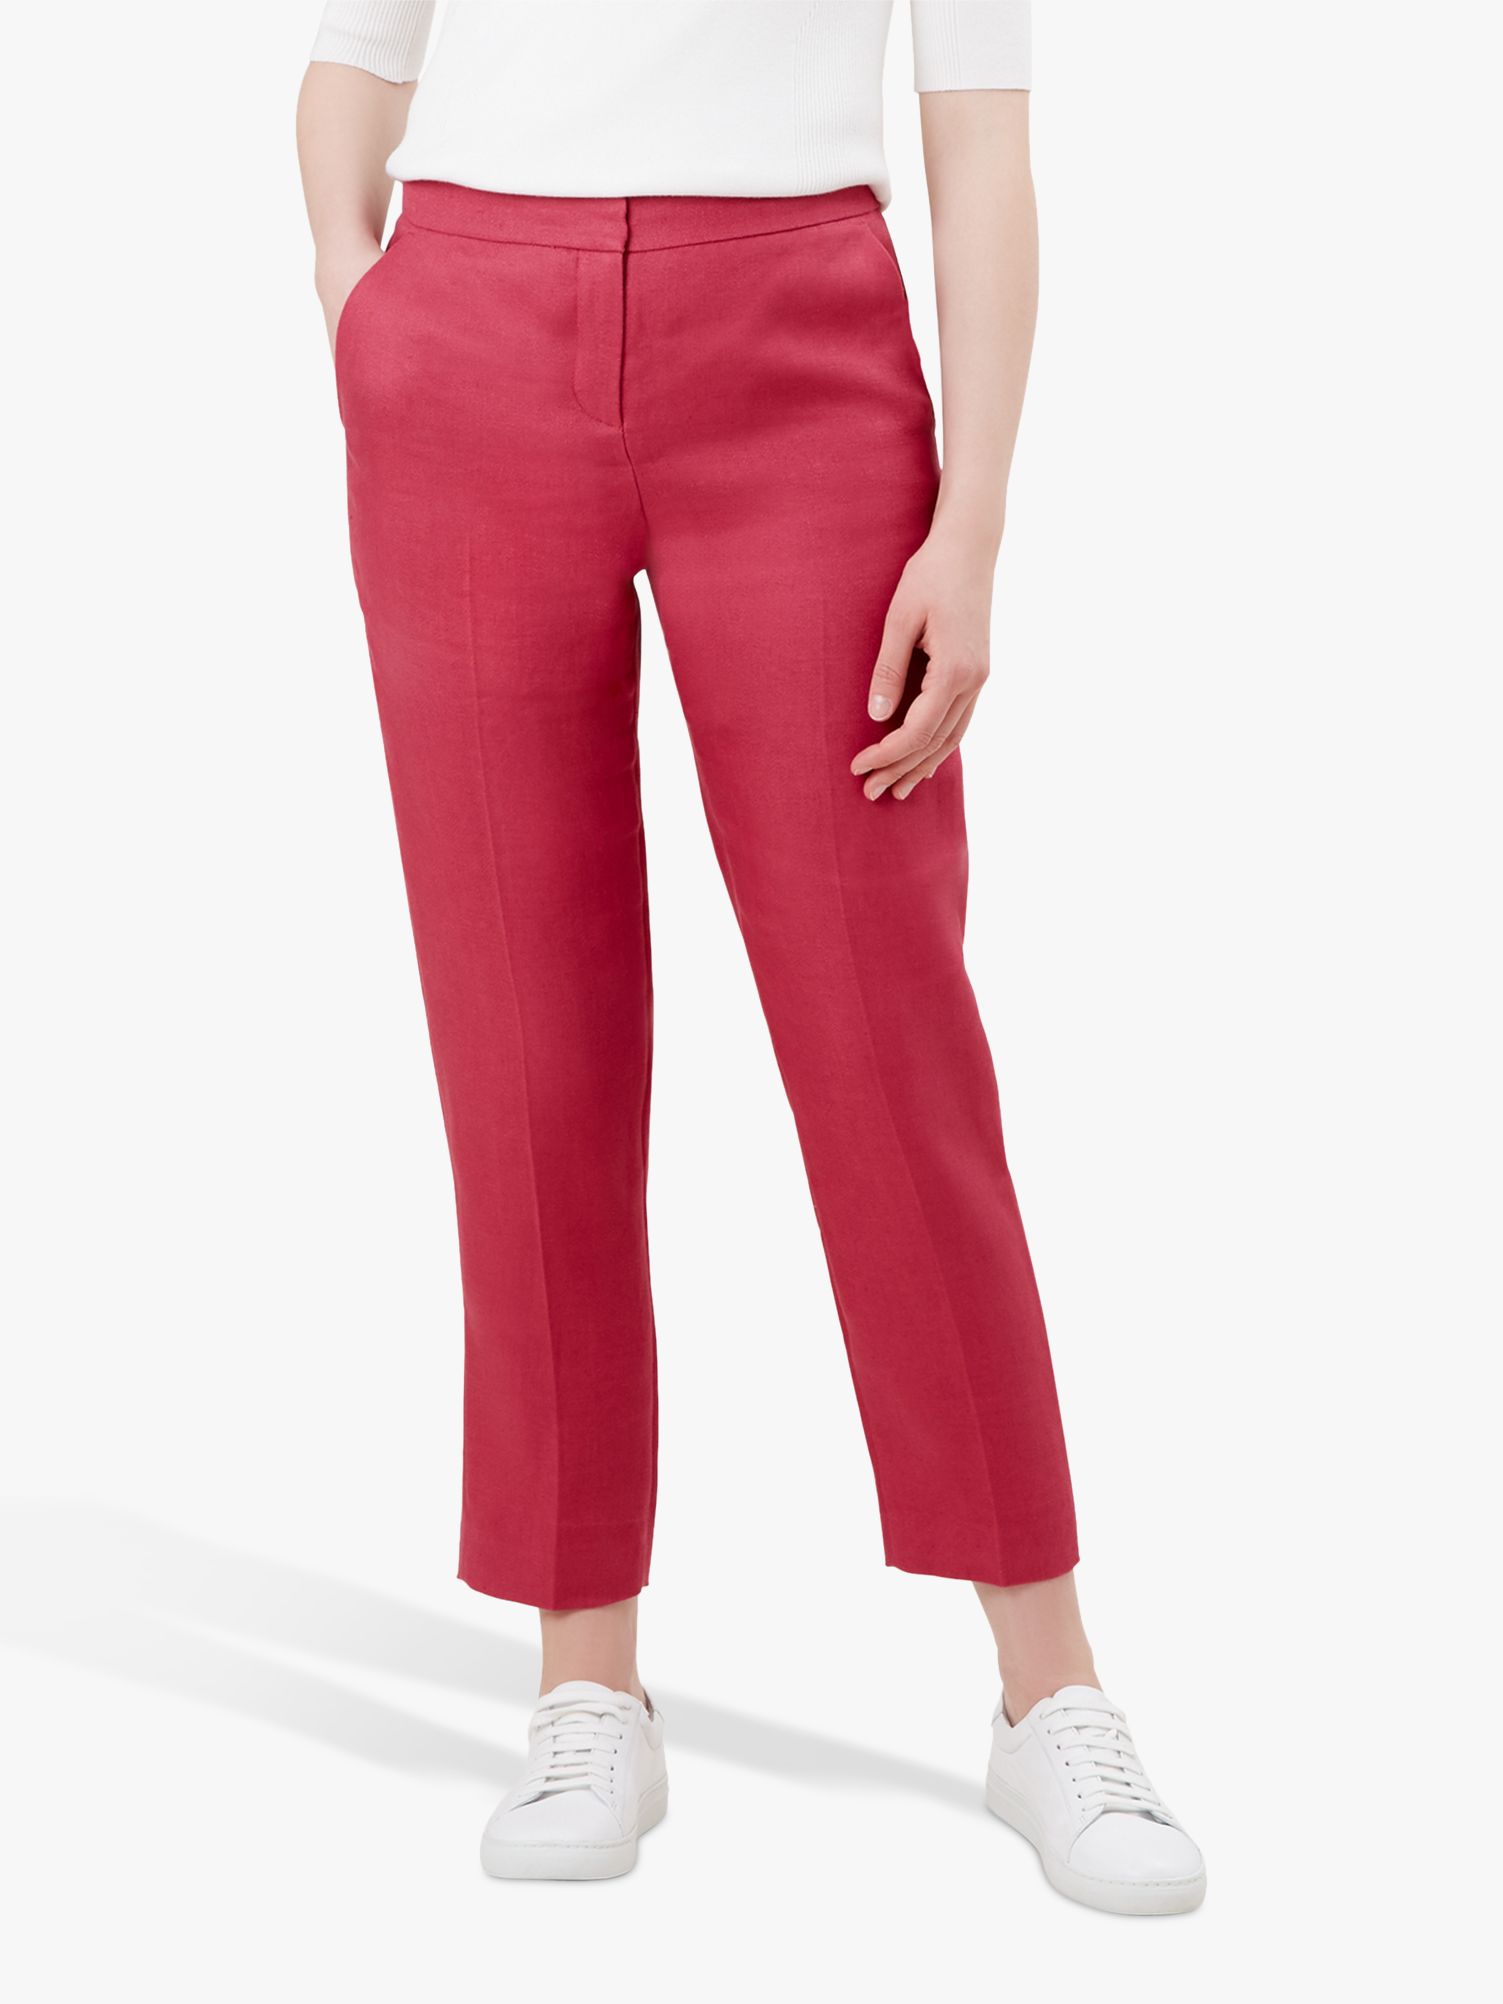 Hobbs Anthea Linen Trousers, Raspberry Pink